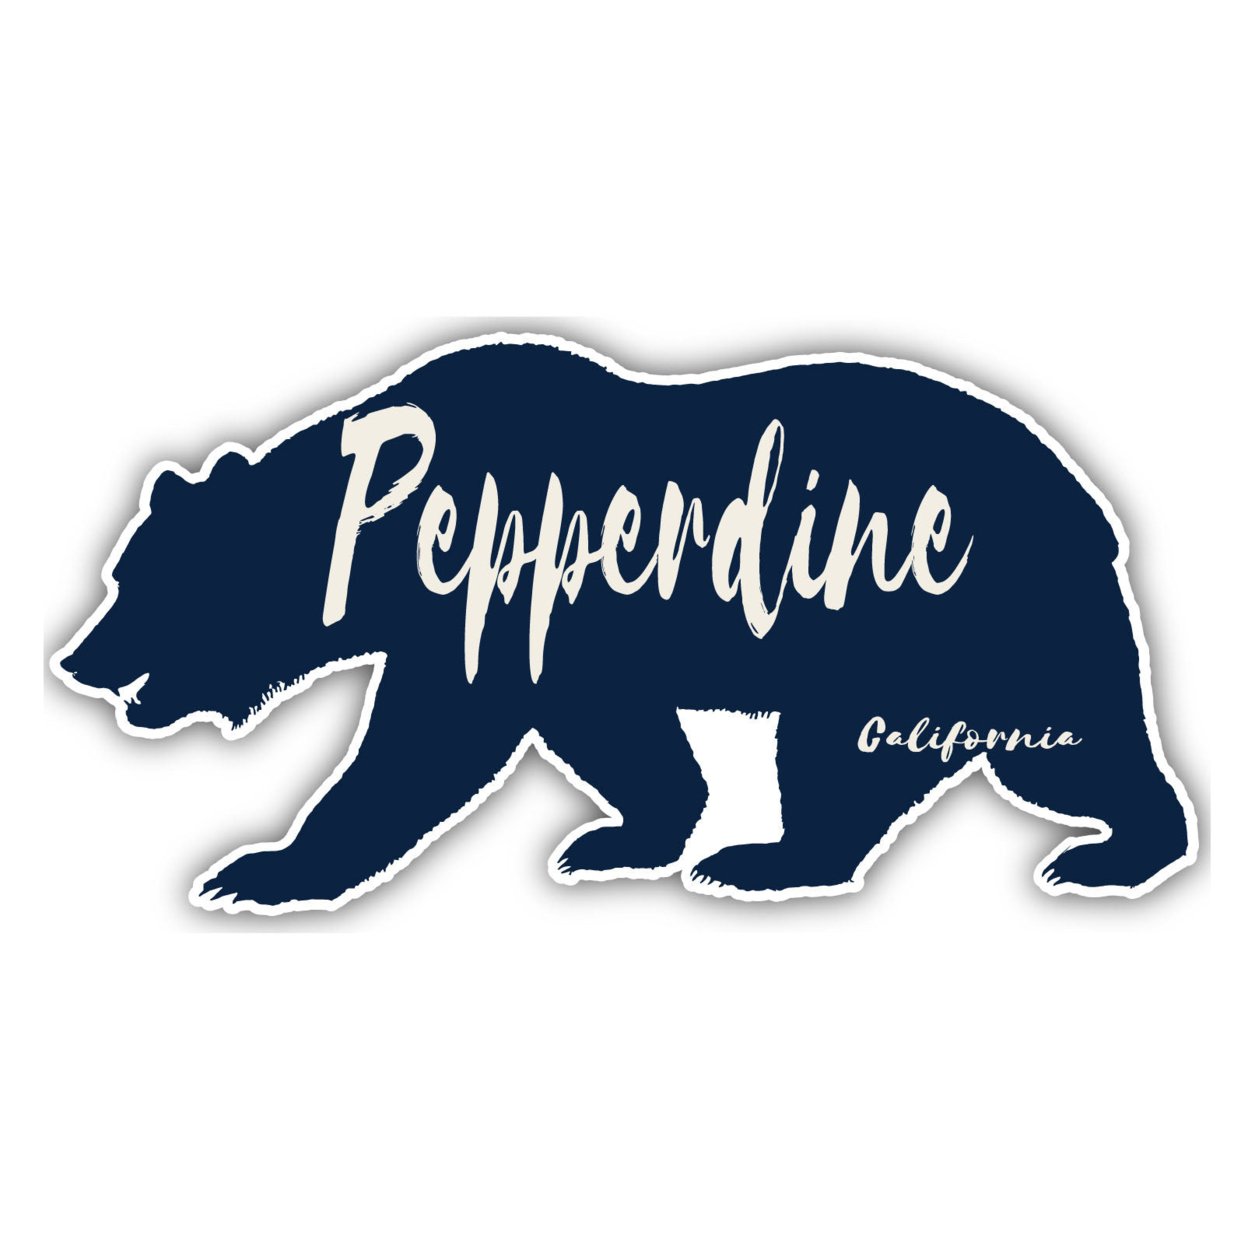 Pepperdine California Souvenir Decorative Stickers (Choose Theme And Size) - Single Unit, 2-Inch, Bear